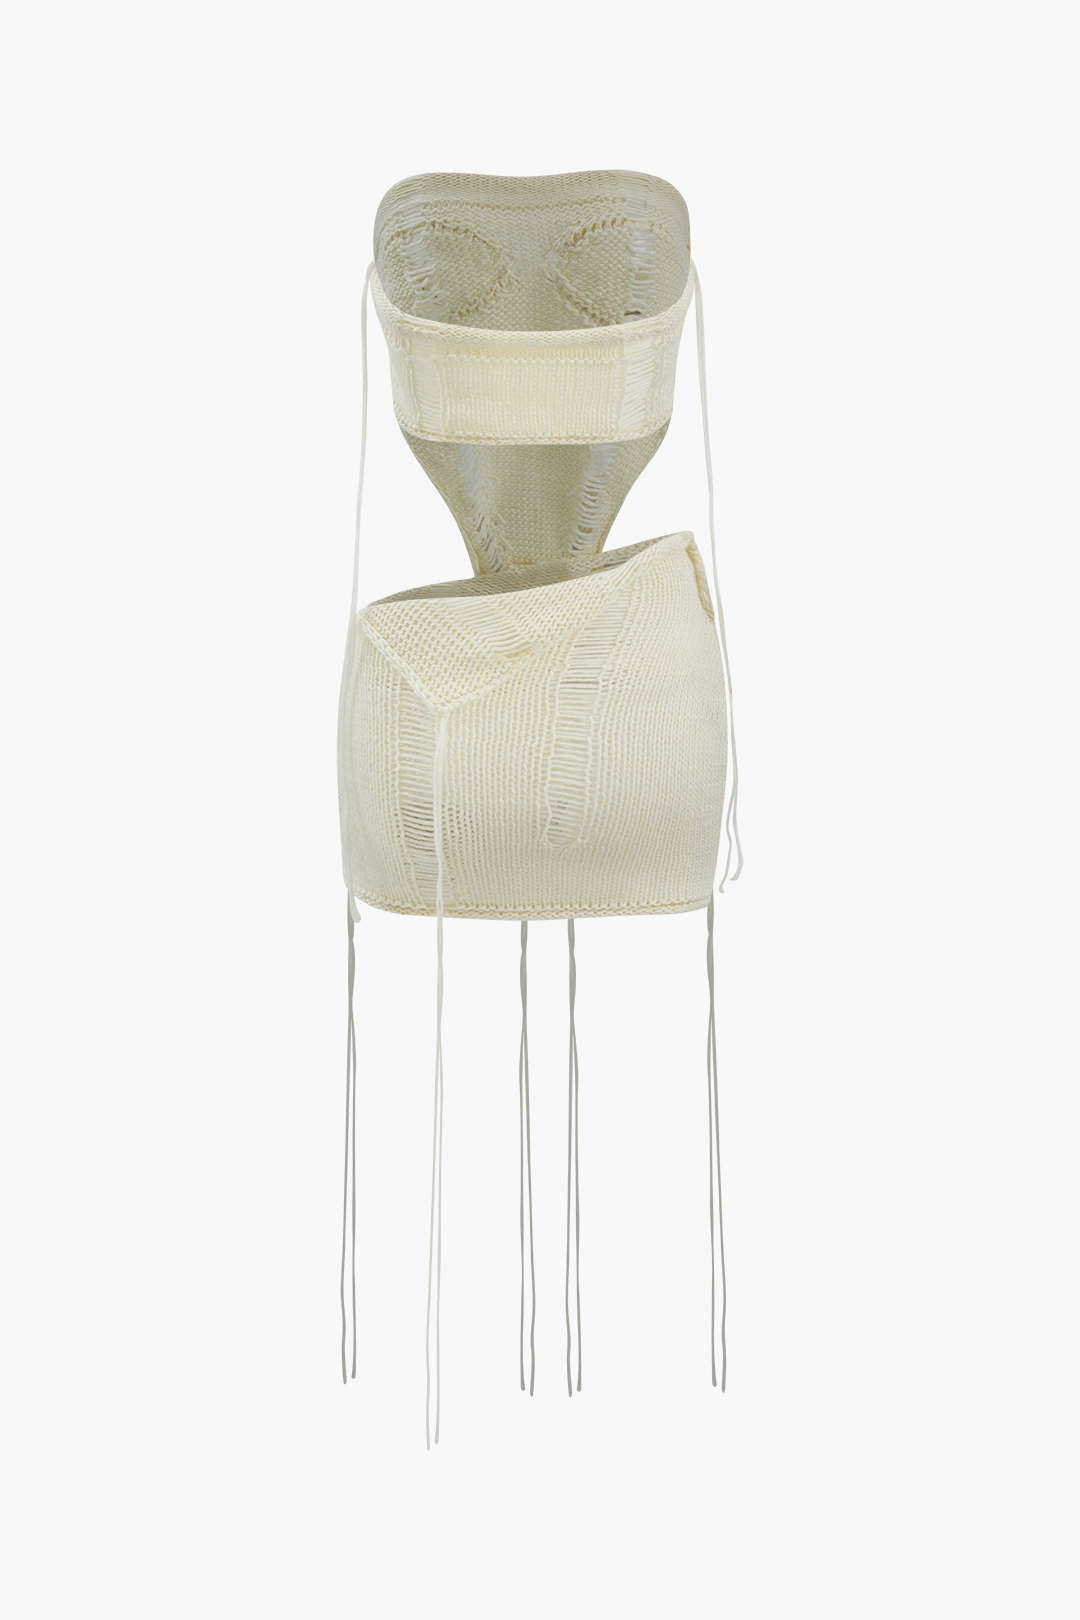 V-Shape Knit Strapless Top And Foldover Mini Skirt Set